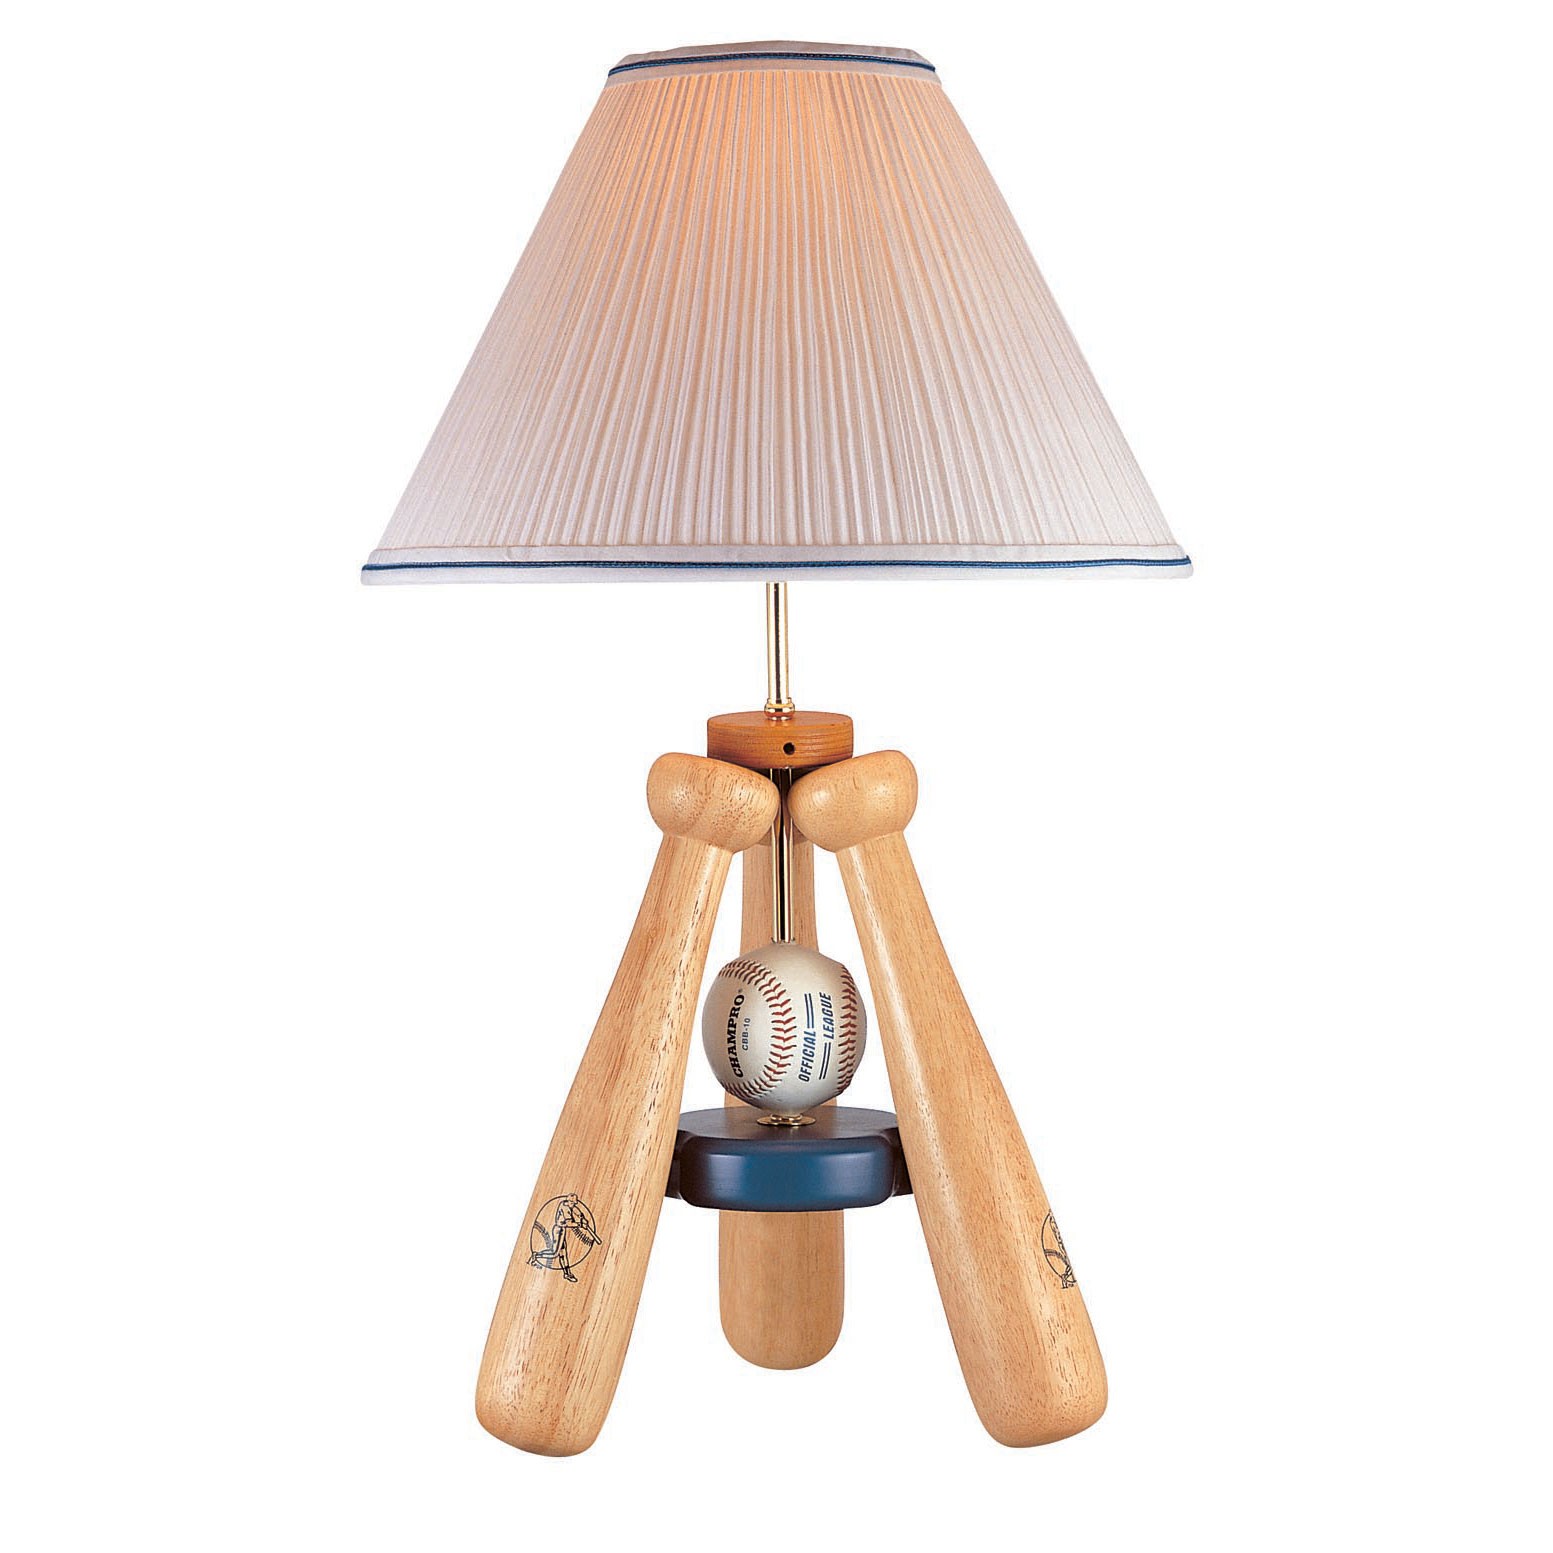 Triple bat table lamp by lite source in kids lamps